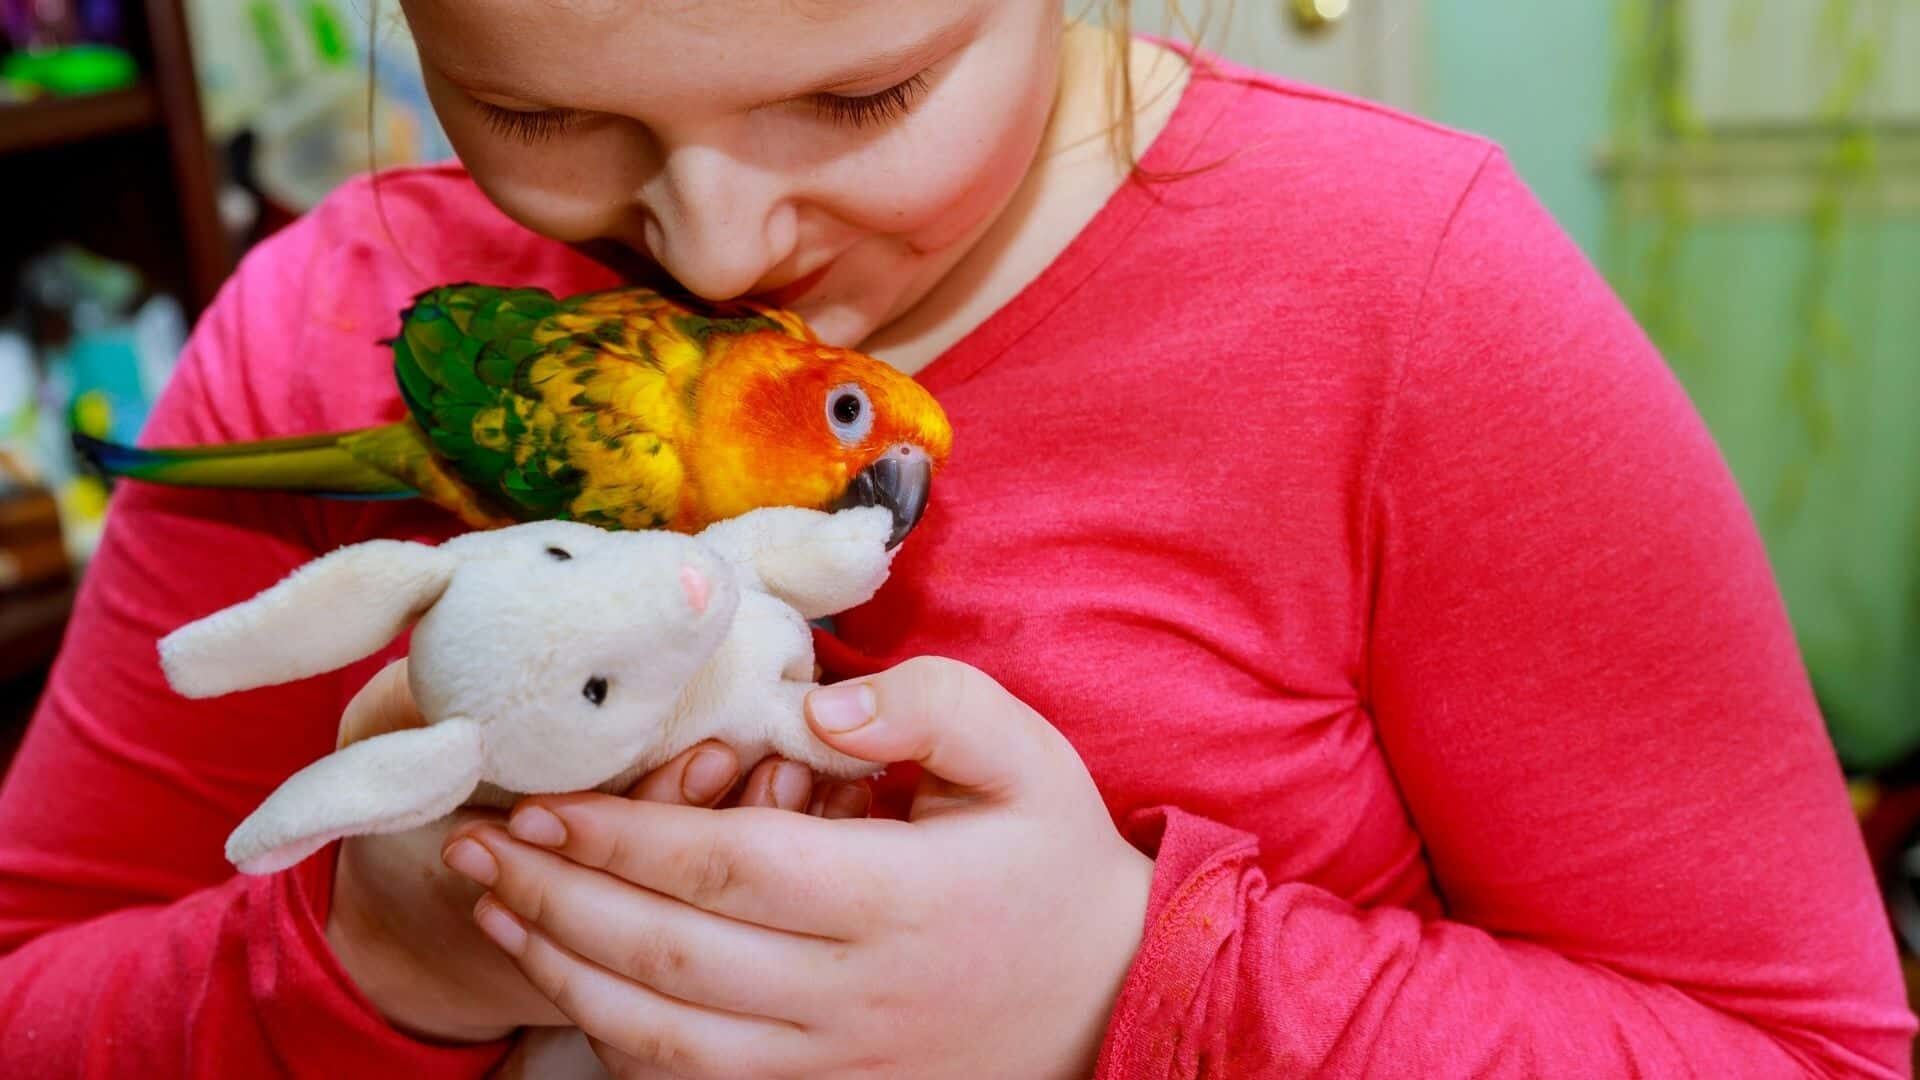 Do birds like being pet?